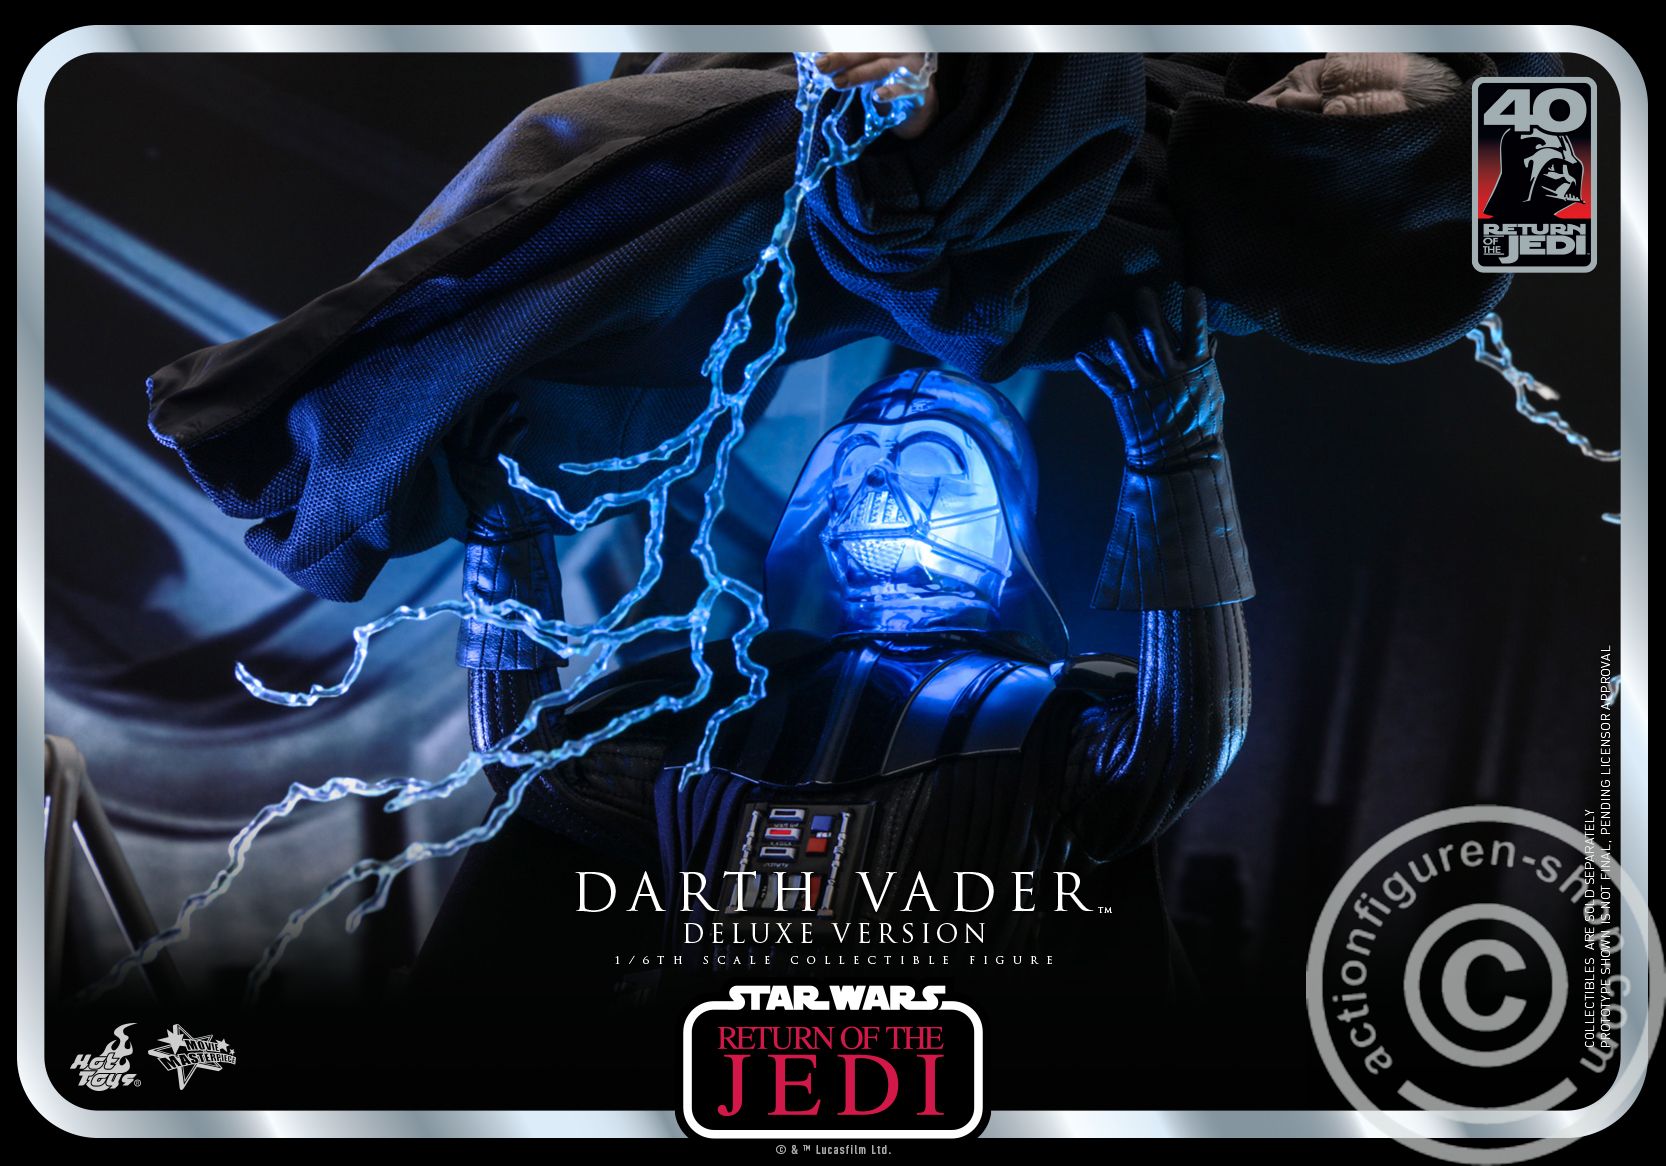 Star Wars Episode VI: Return of the Jedi - Darth Vader (Deluxe Version)